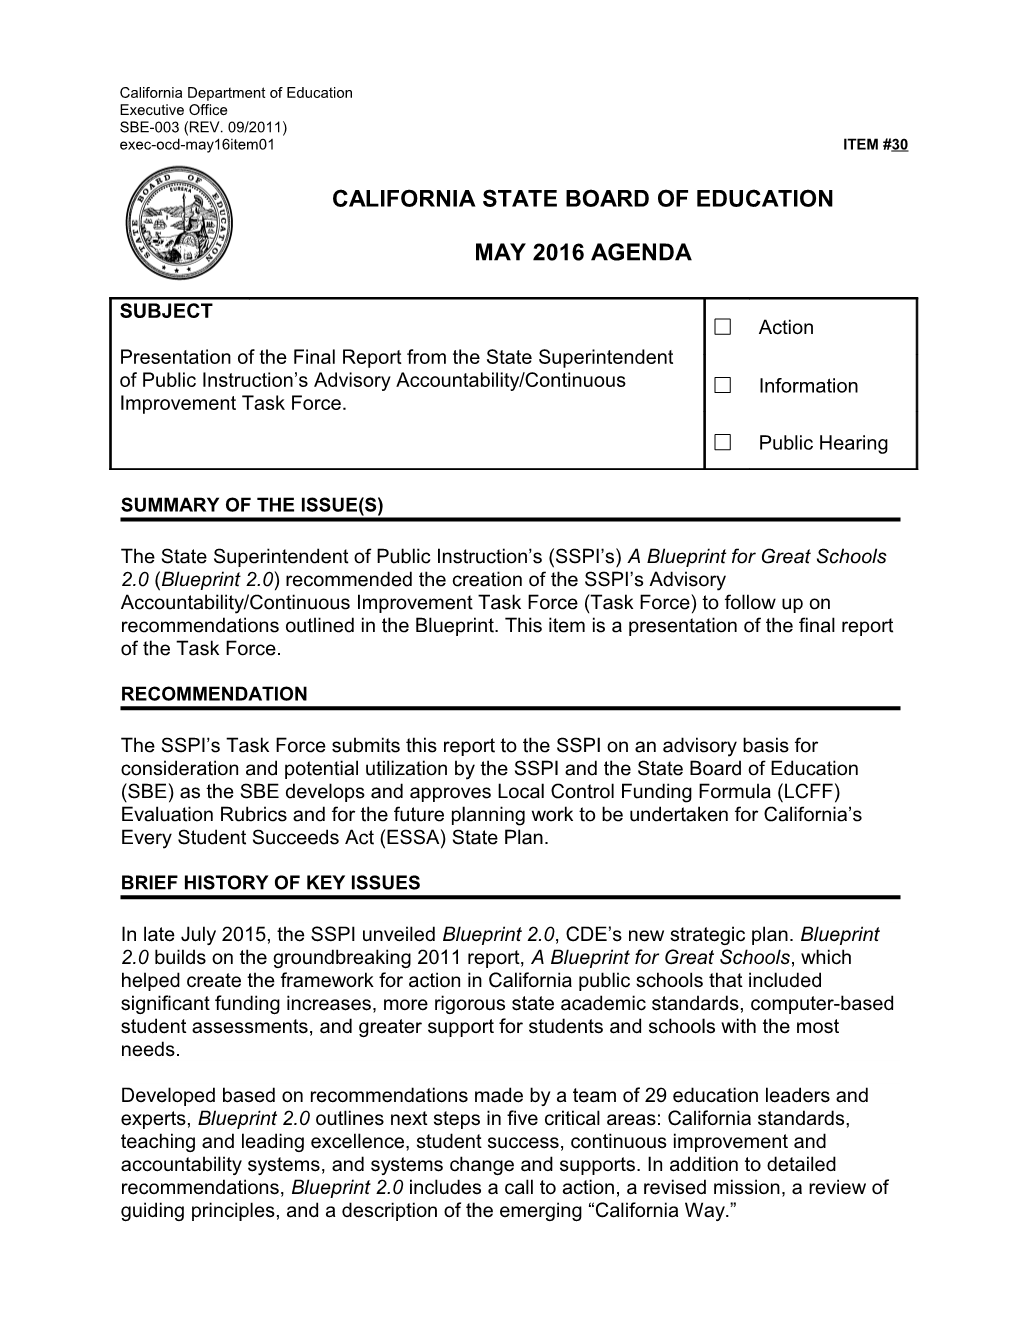 May 2016 Agenda Item 30 - Meeting Agendas (CA State Board of Education)